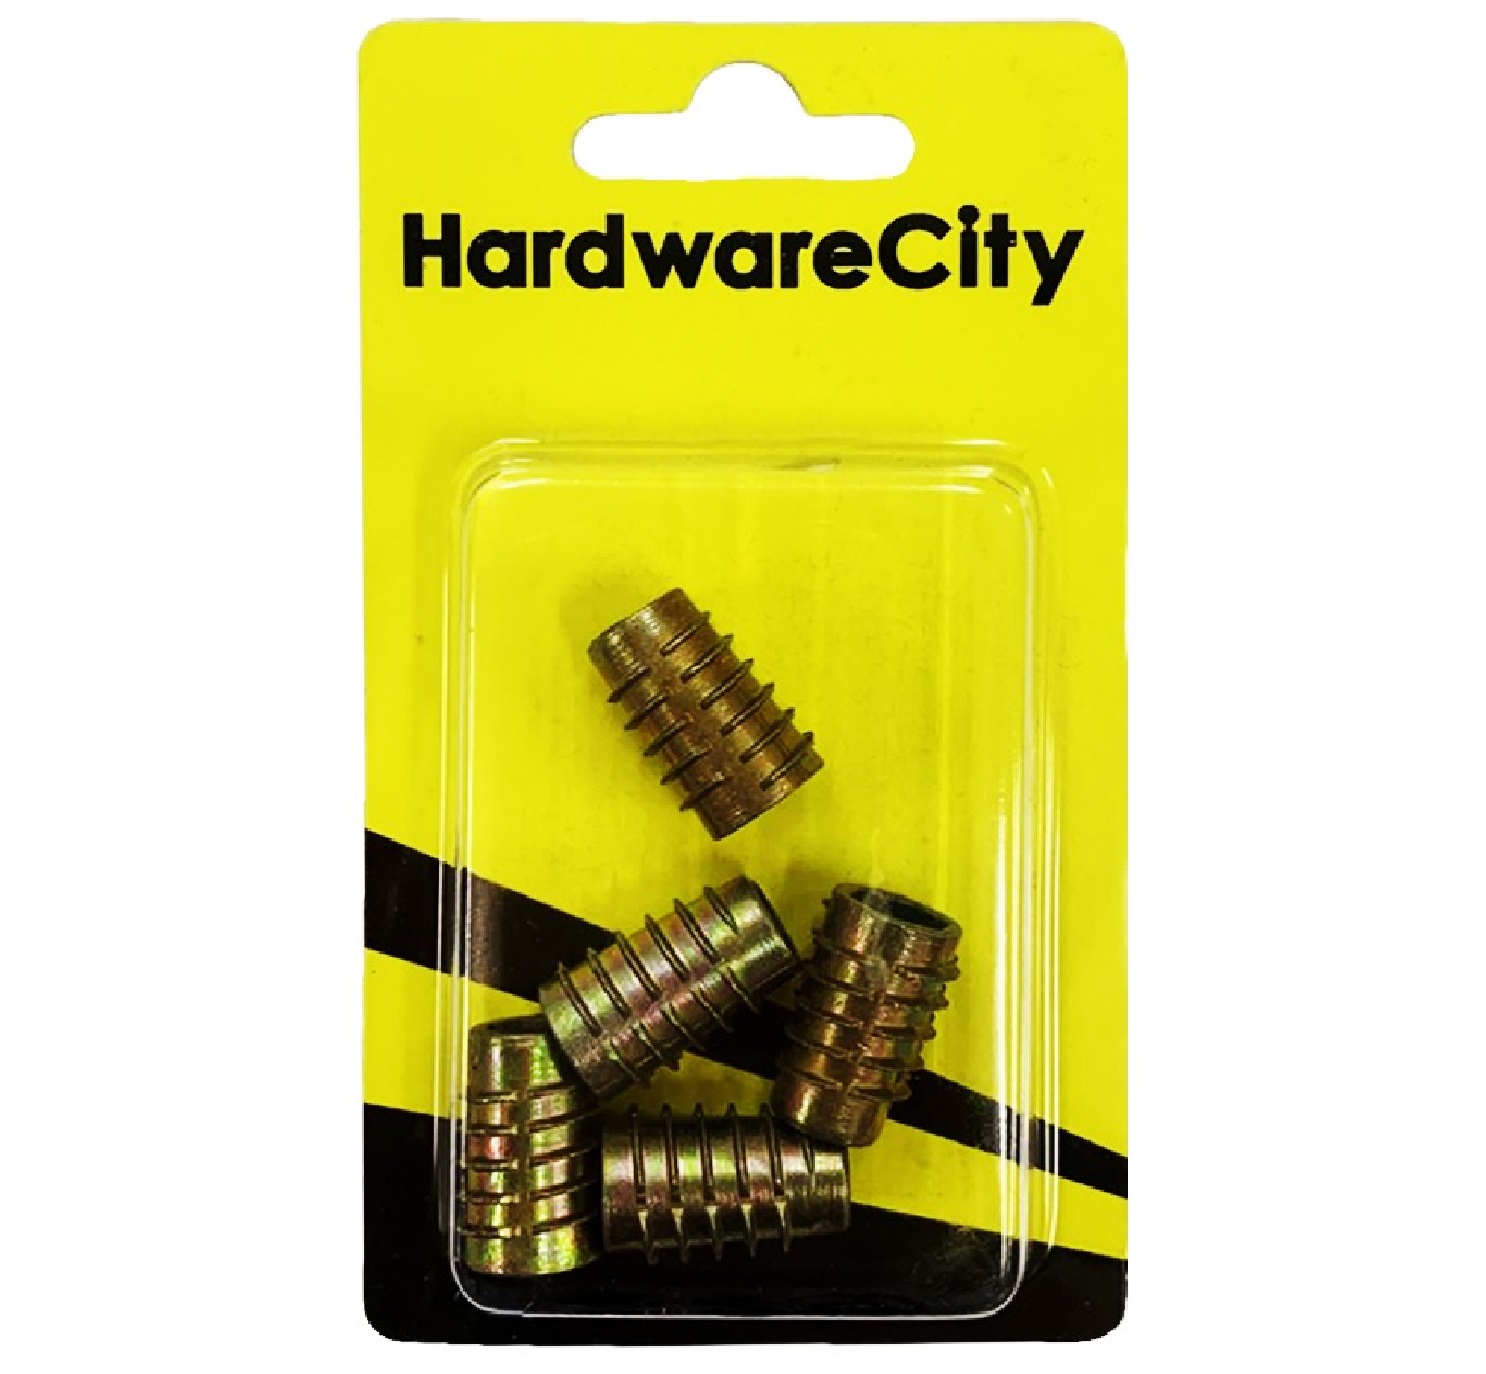 HardwareCity 5/16 Threaded Insert E-Nut, 5PC/Pack